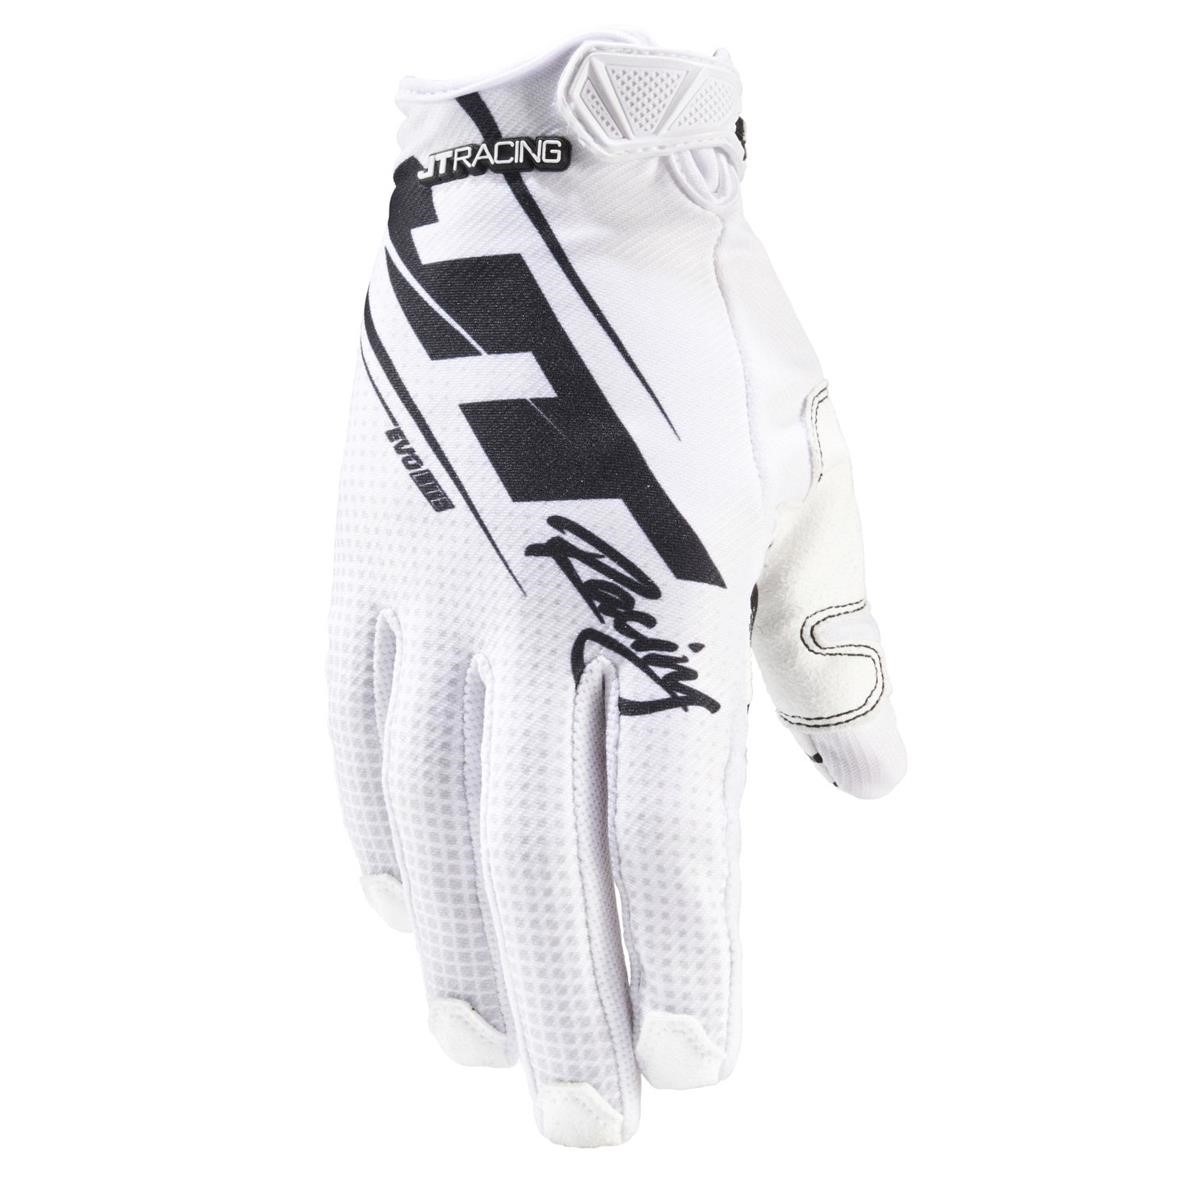 JT Racing USA Gloves Lite Slasher White/Black